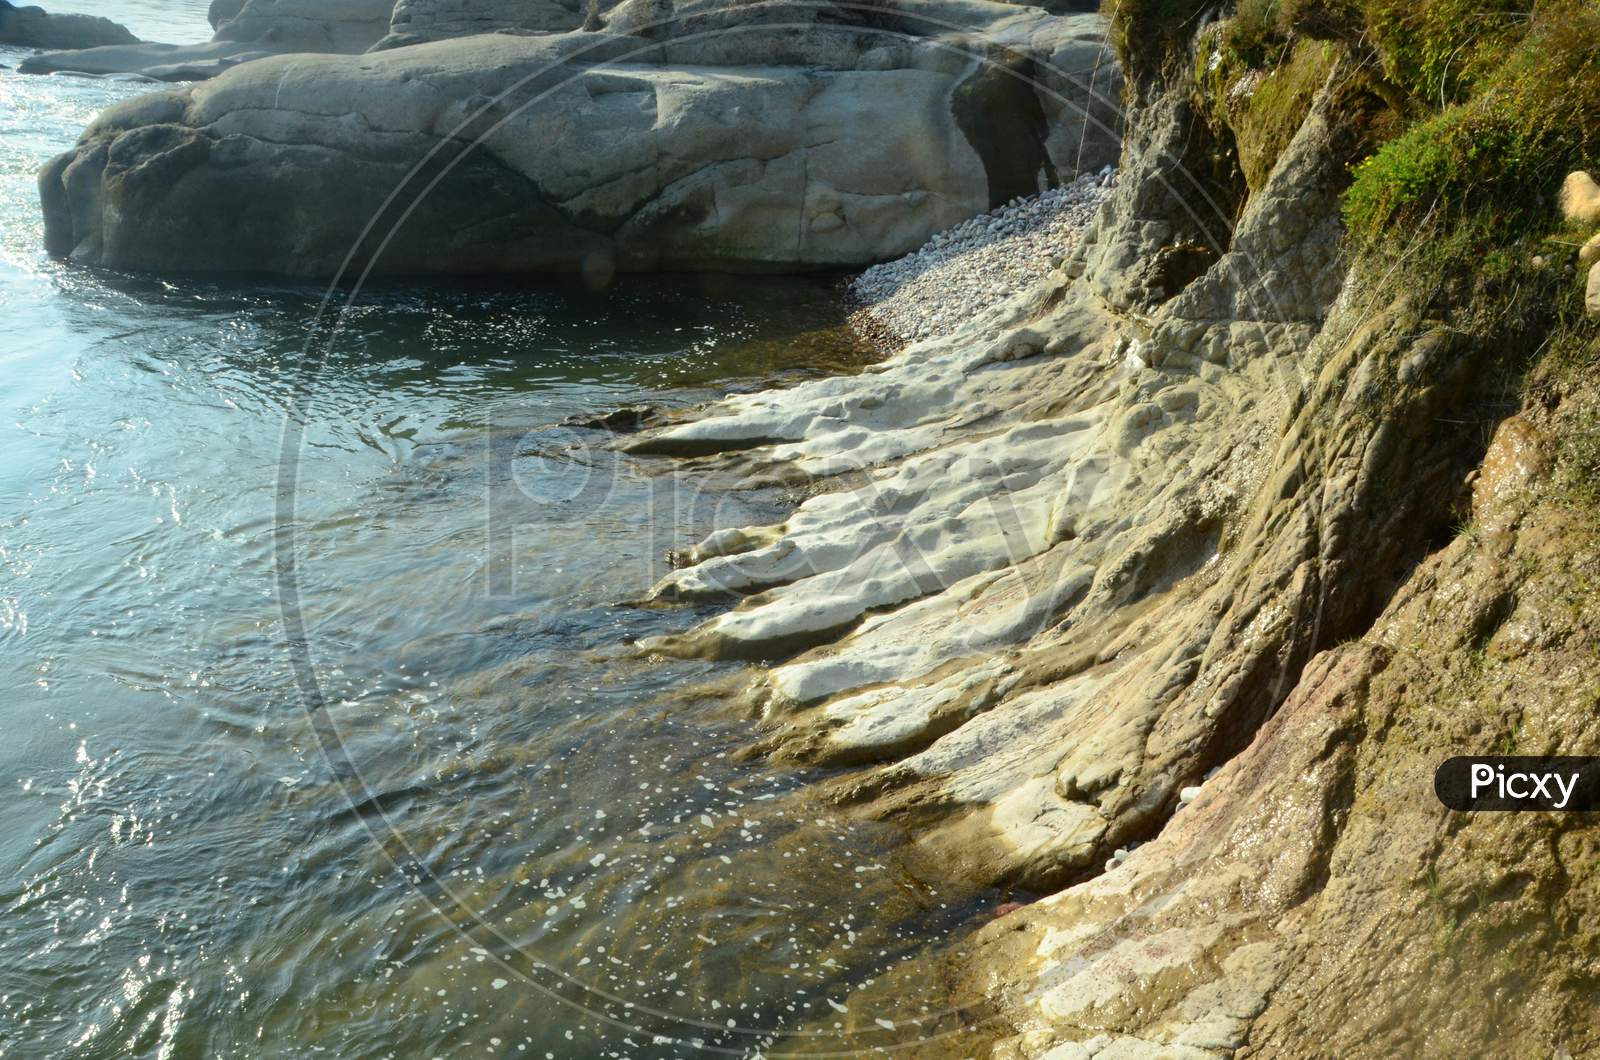 Natural location Rock and river Himachal Pradesh India